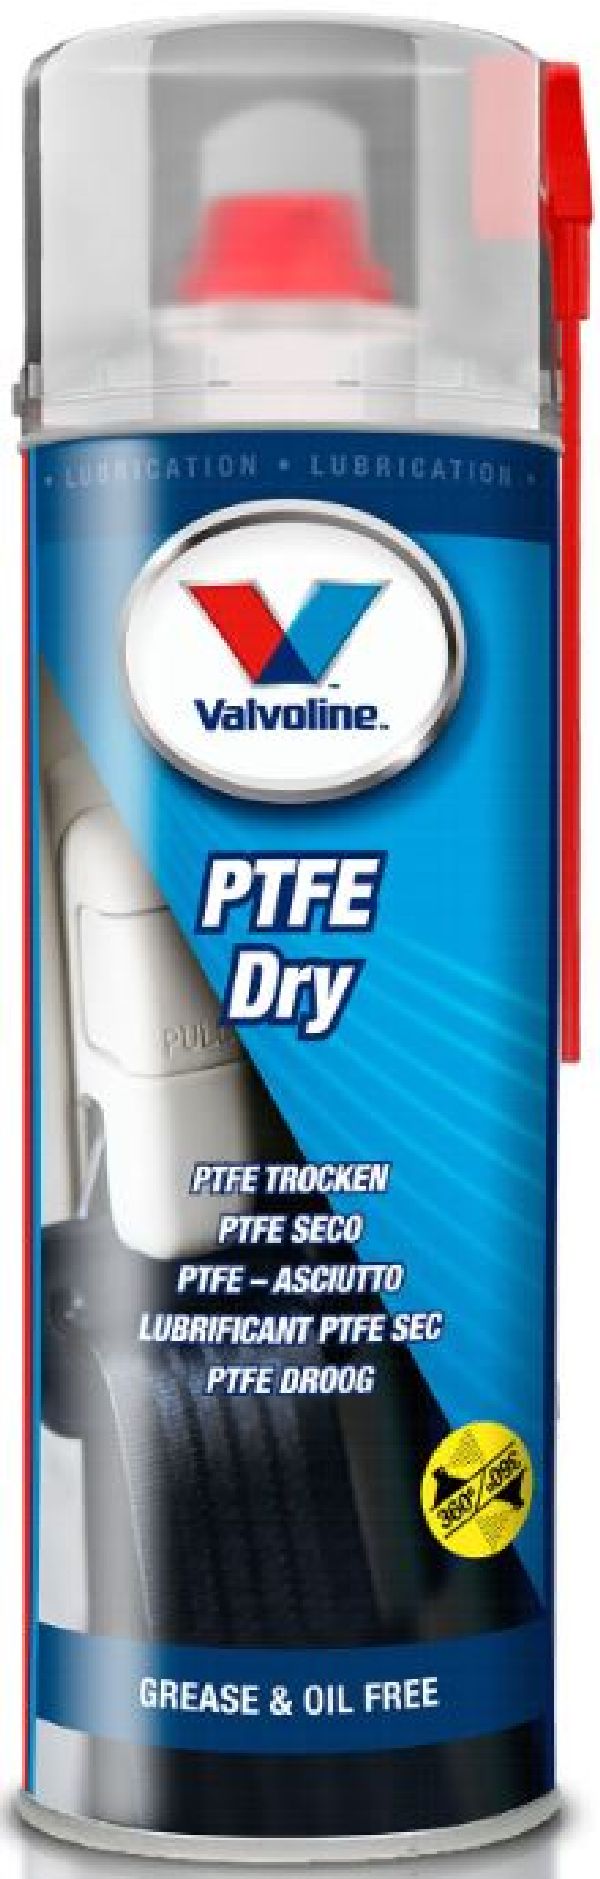 Valvoline PTFE Dry